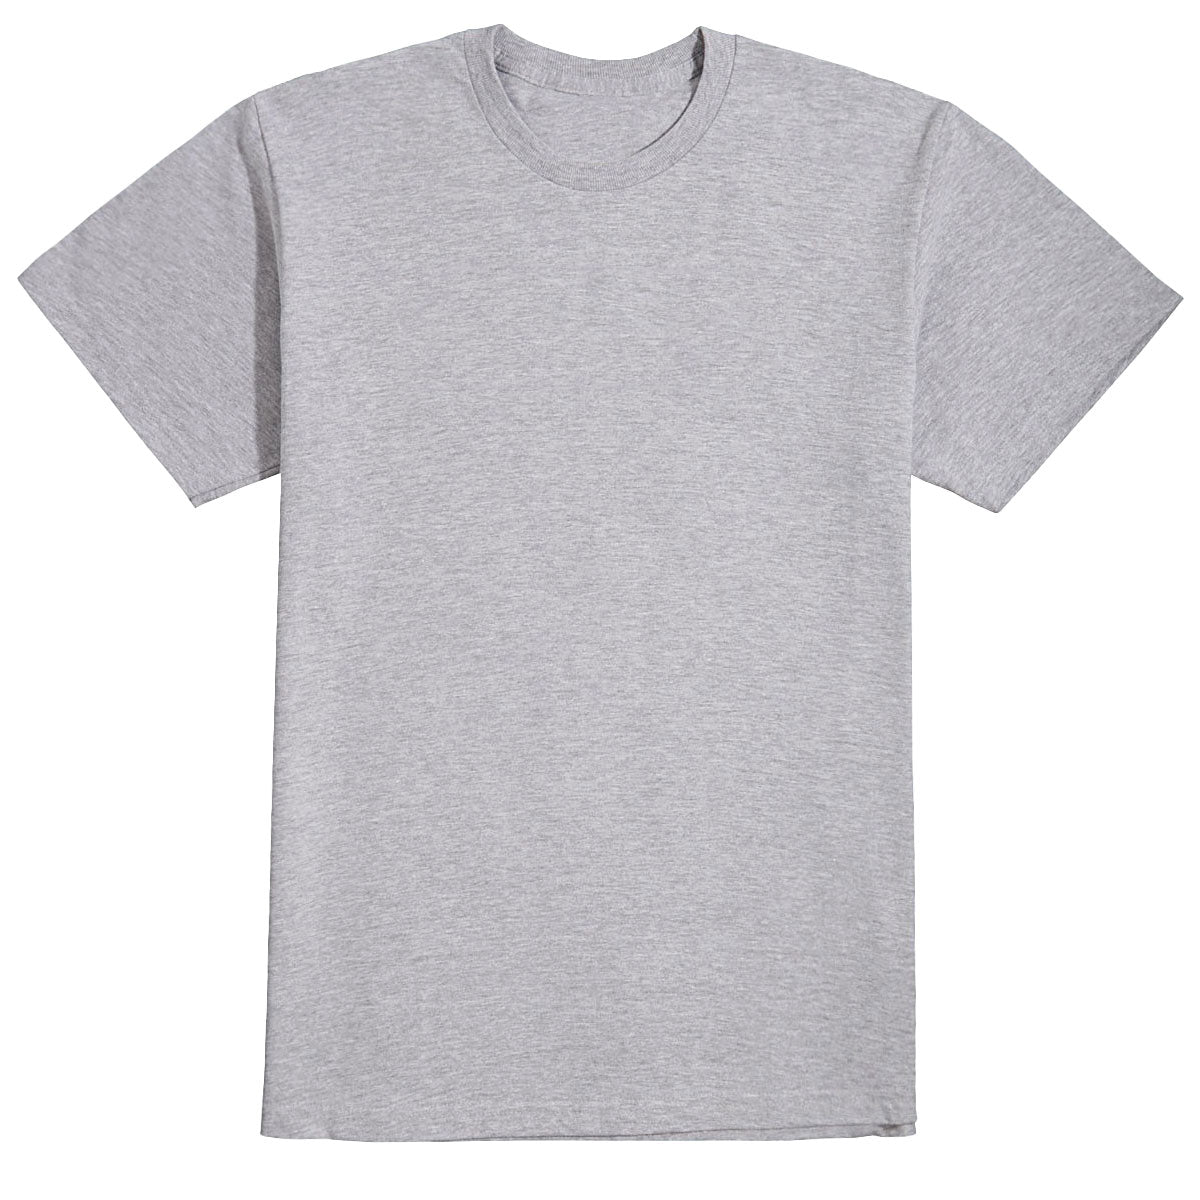 Converse Flash Sheet T-Shirt - Heather Grey - SM image 1